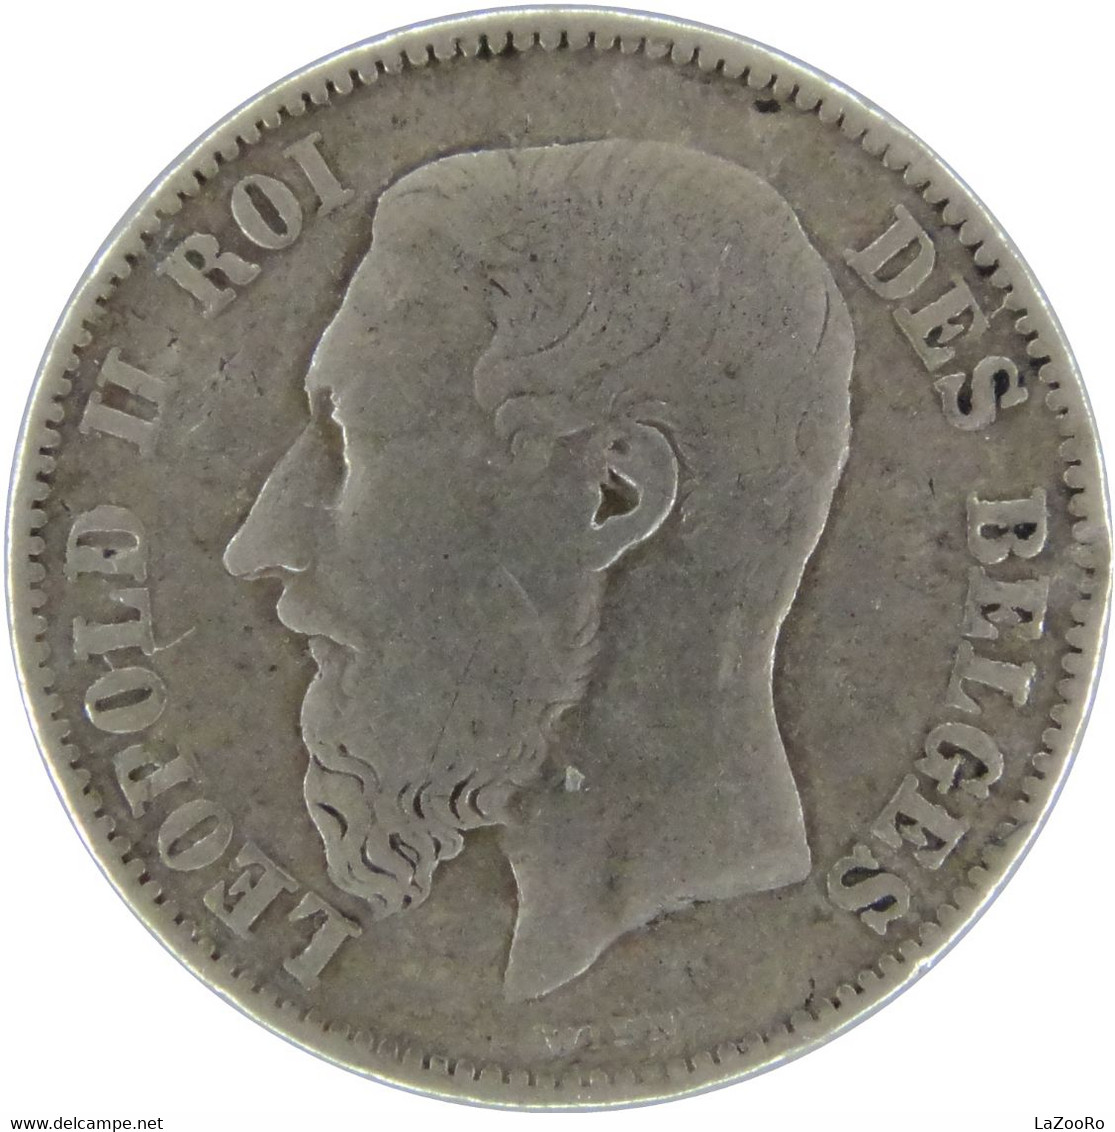 LaZooRo: Belgium 50 Centimes 1866 VF / XF - Silver - 50 Centimes